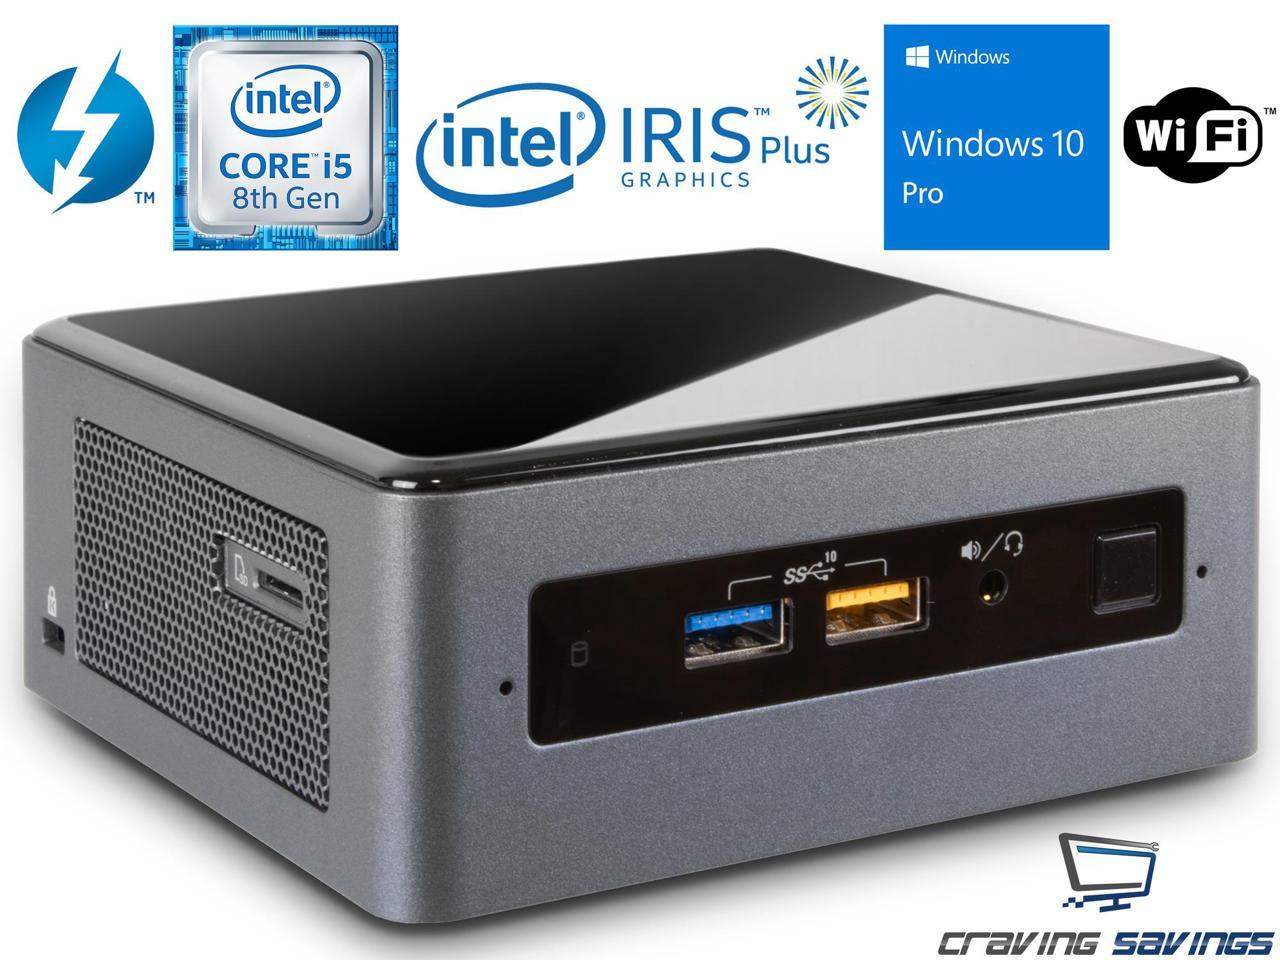 Intel NUC8i5BEH Mini PC/HTPC, Intel Core i5-8259U Up to 3.8GHz, 16GB DDR4, 256GB SSD + 1TB HDD, Wifi, Bluetooth 5.0, 4K Support, Dual Monitor Capable, Windows 10 Pro